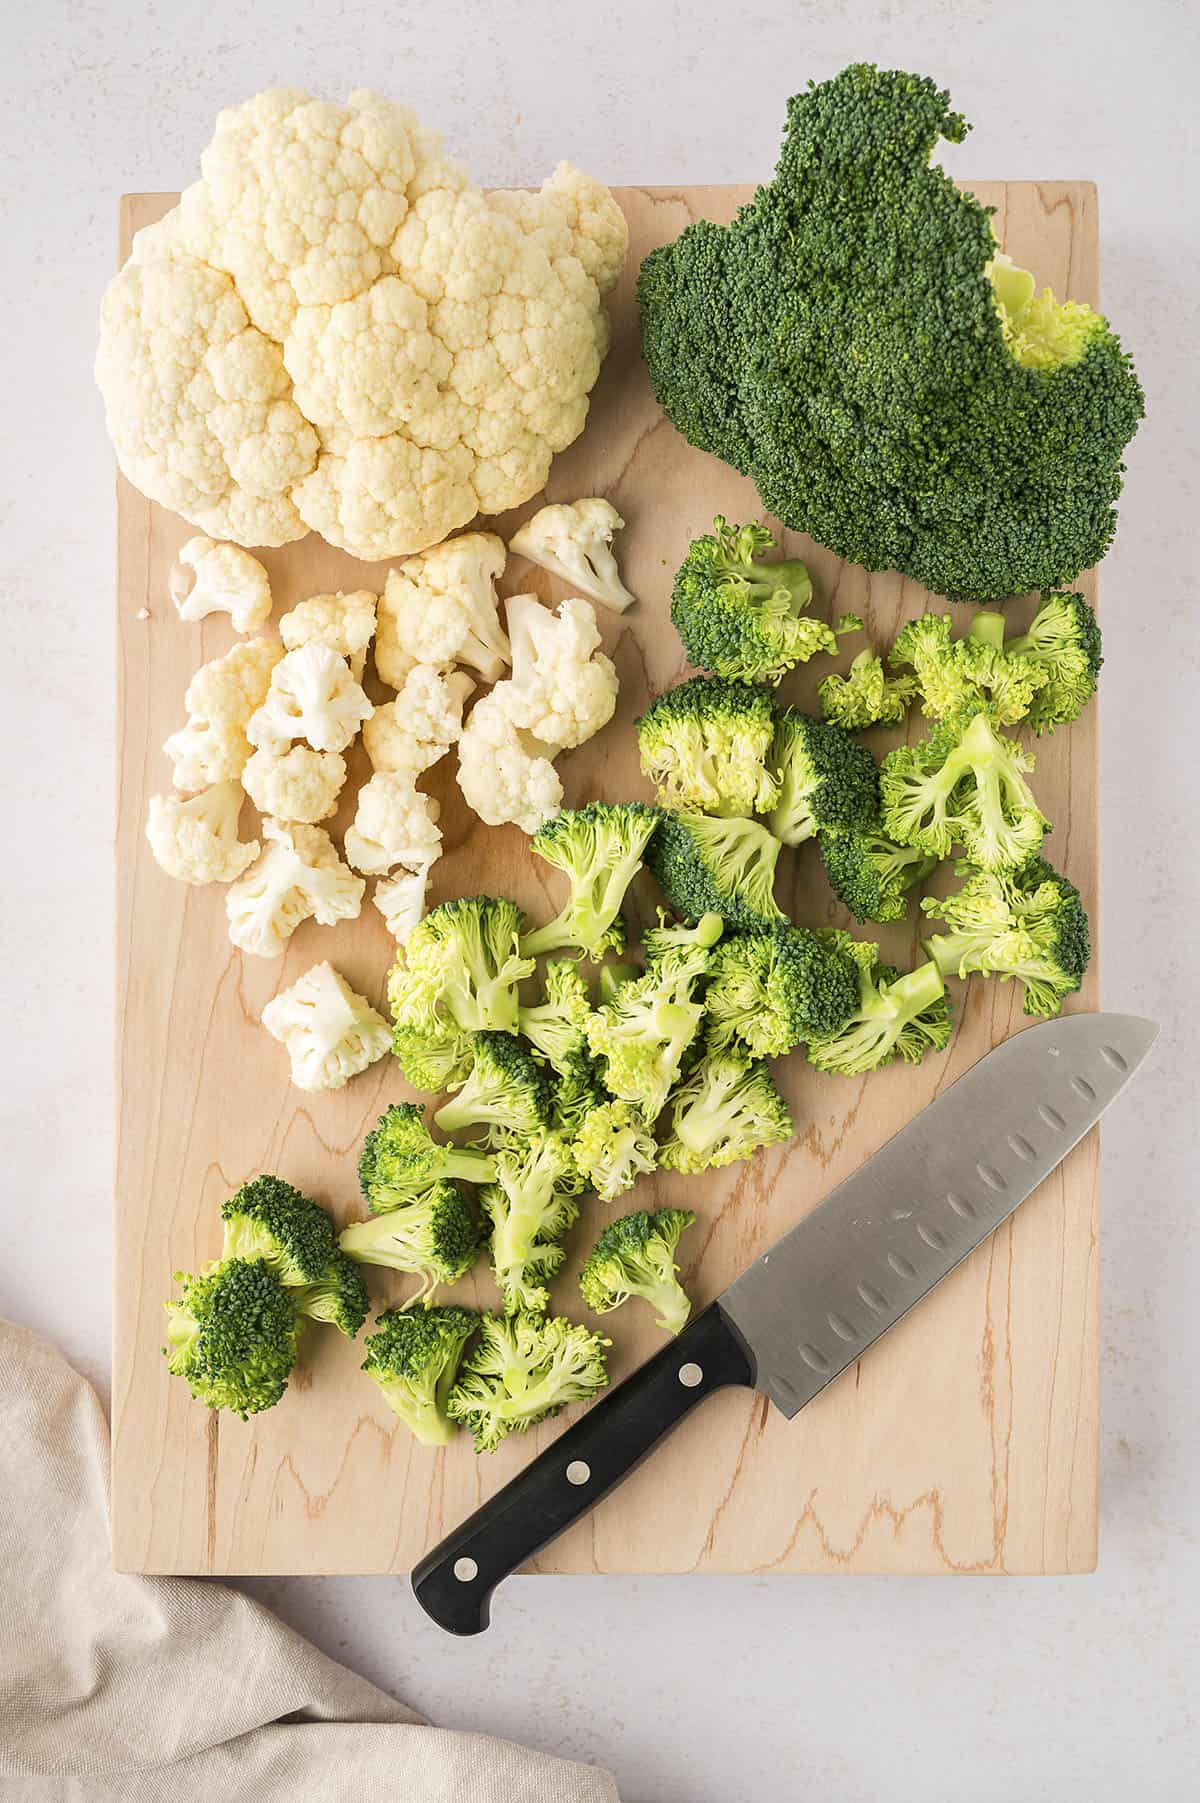 Broccoli and cauliflower on cutting board with knife.